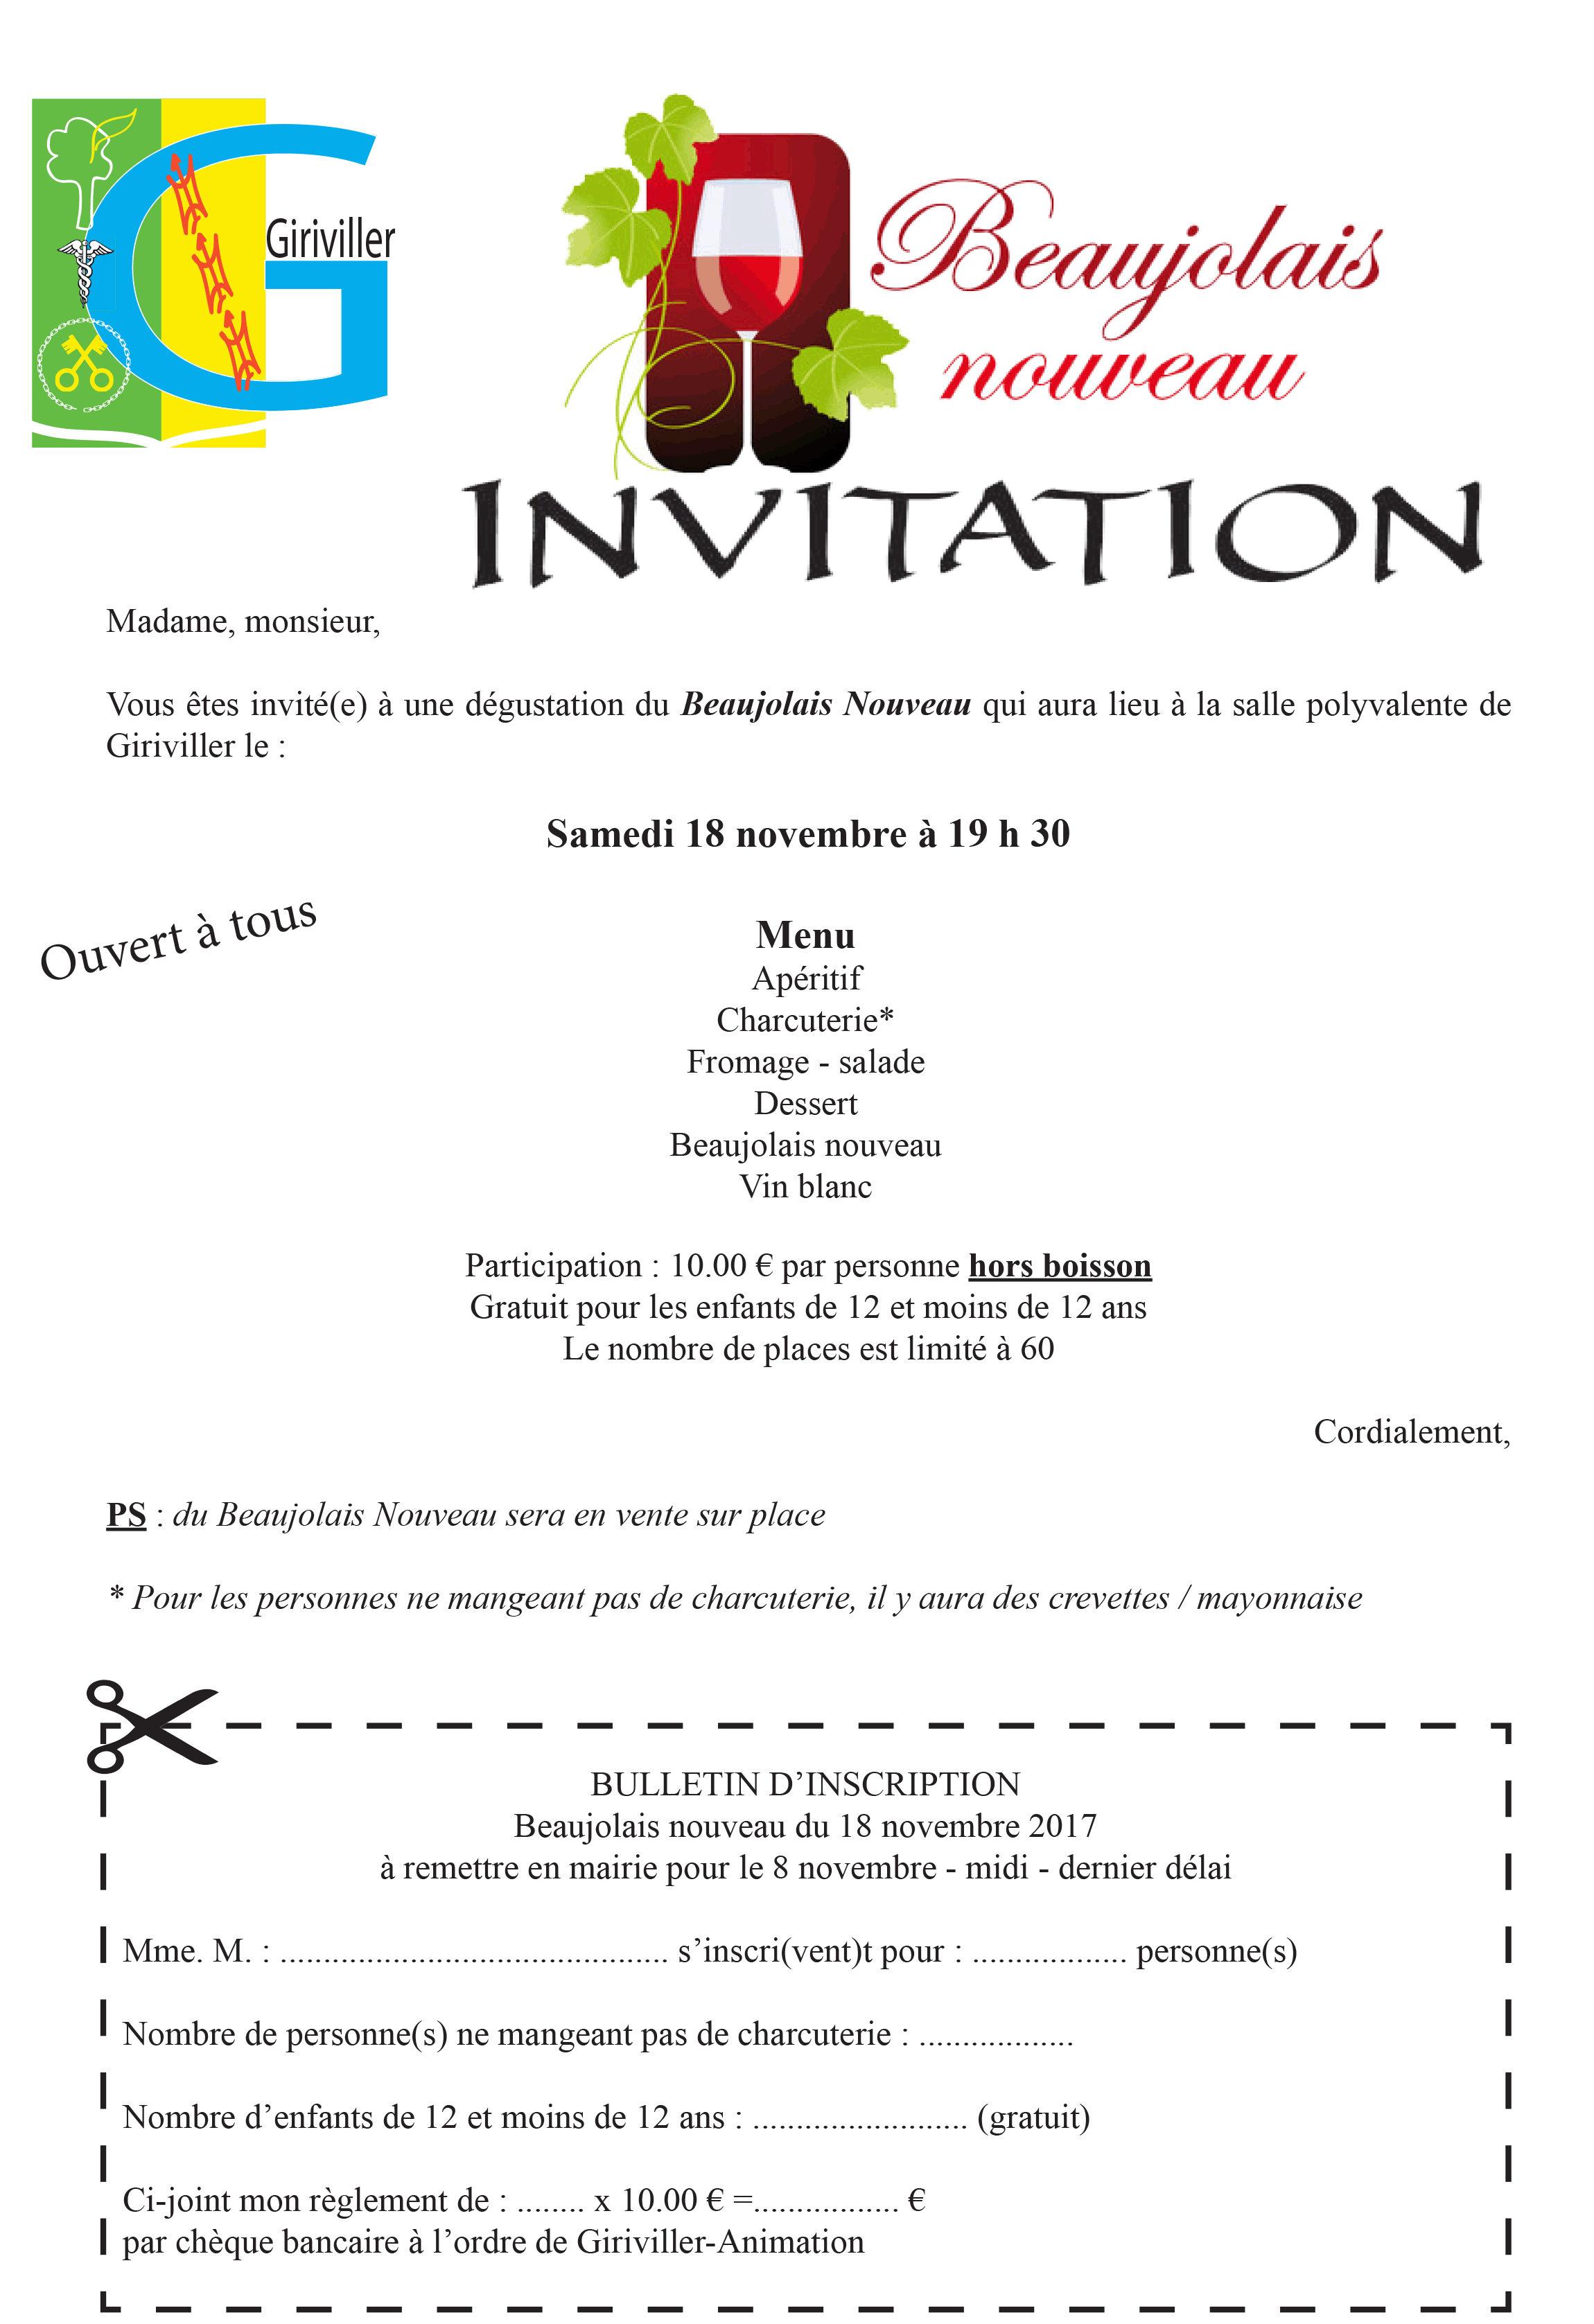 Beaujolais invitation1111.gif